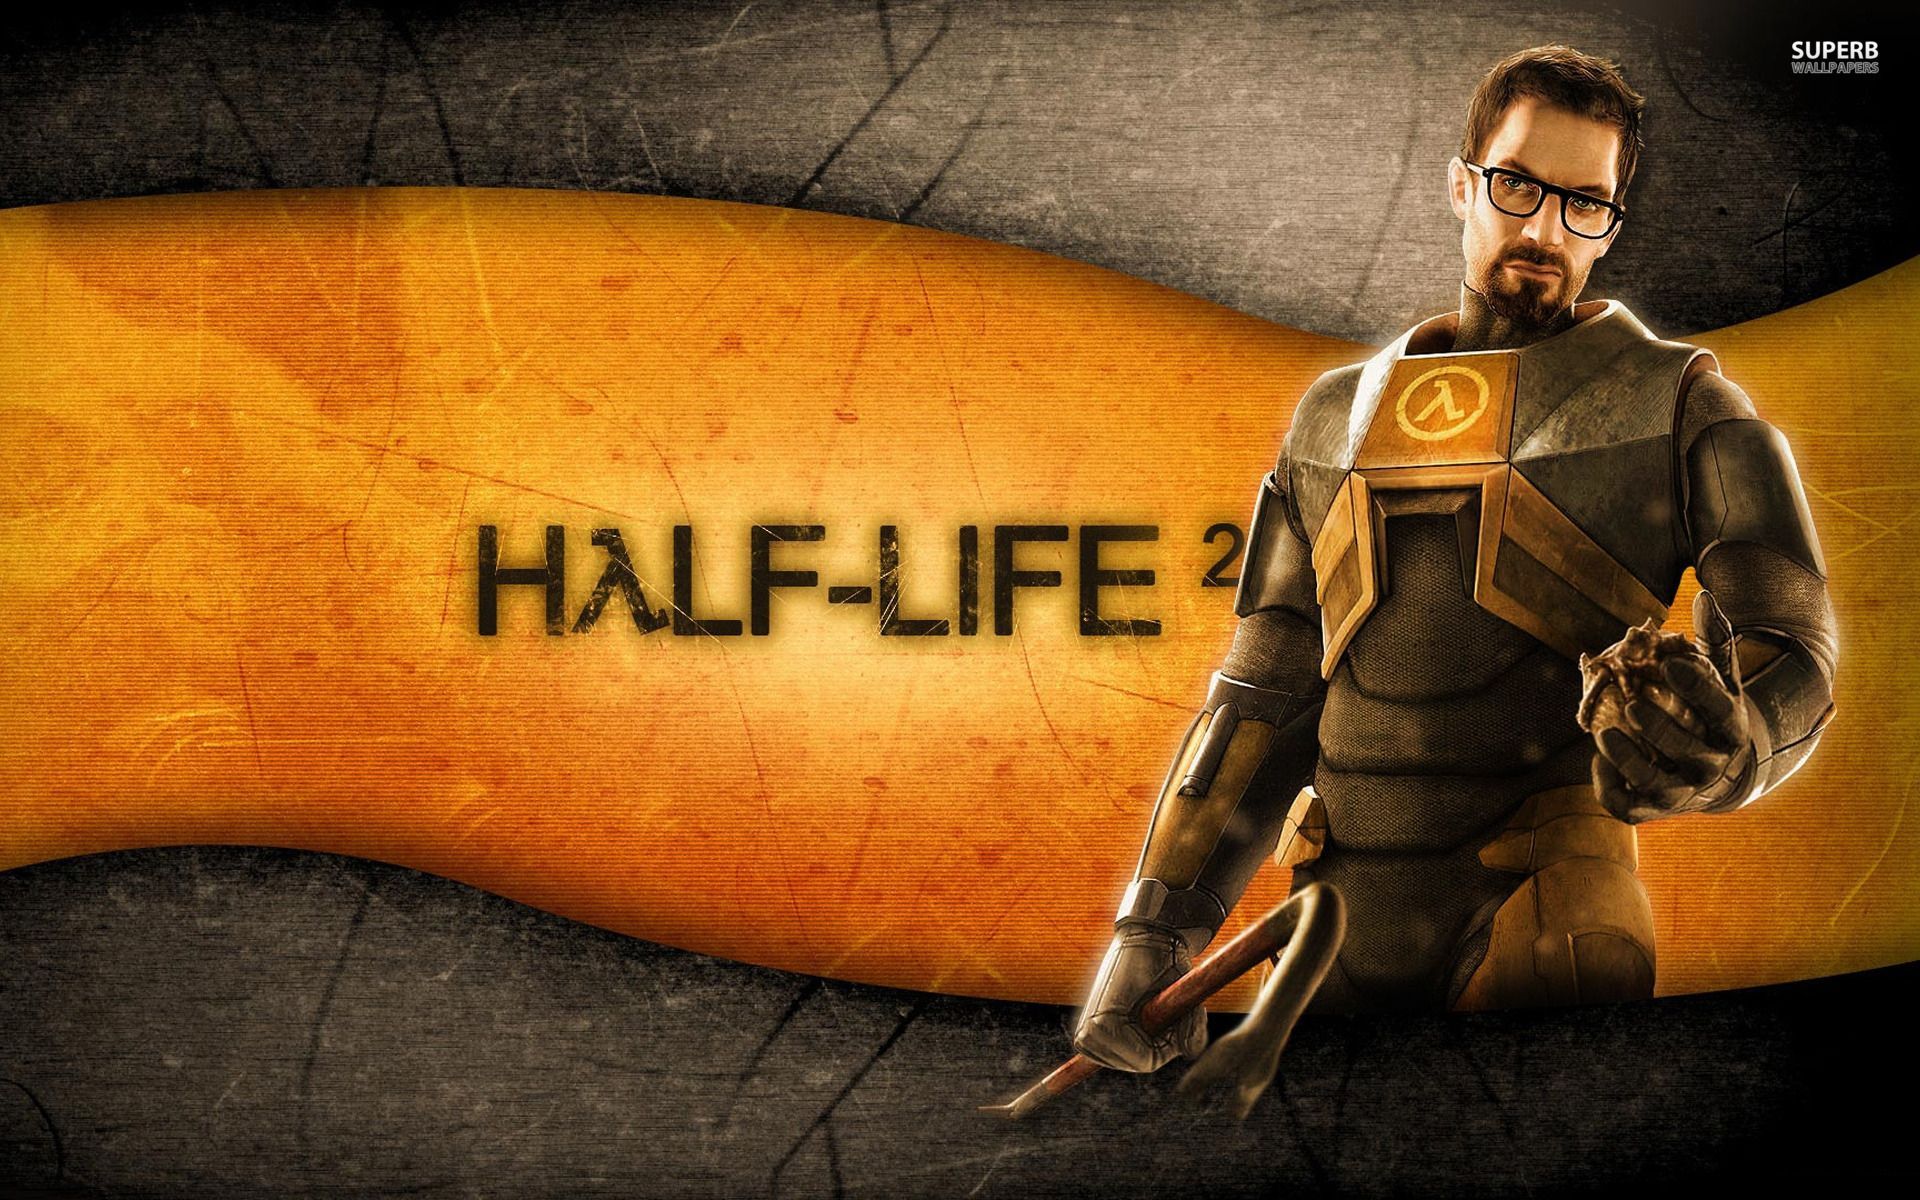 Gordon Freeman - Half-Life 2 wallpaper - Game wallpapers - #23285